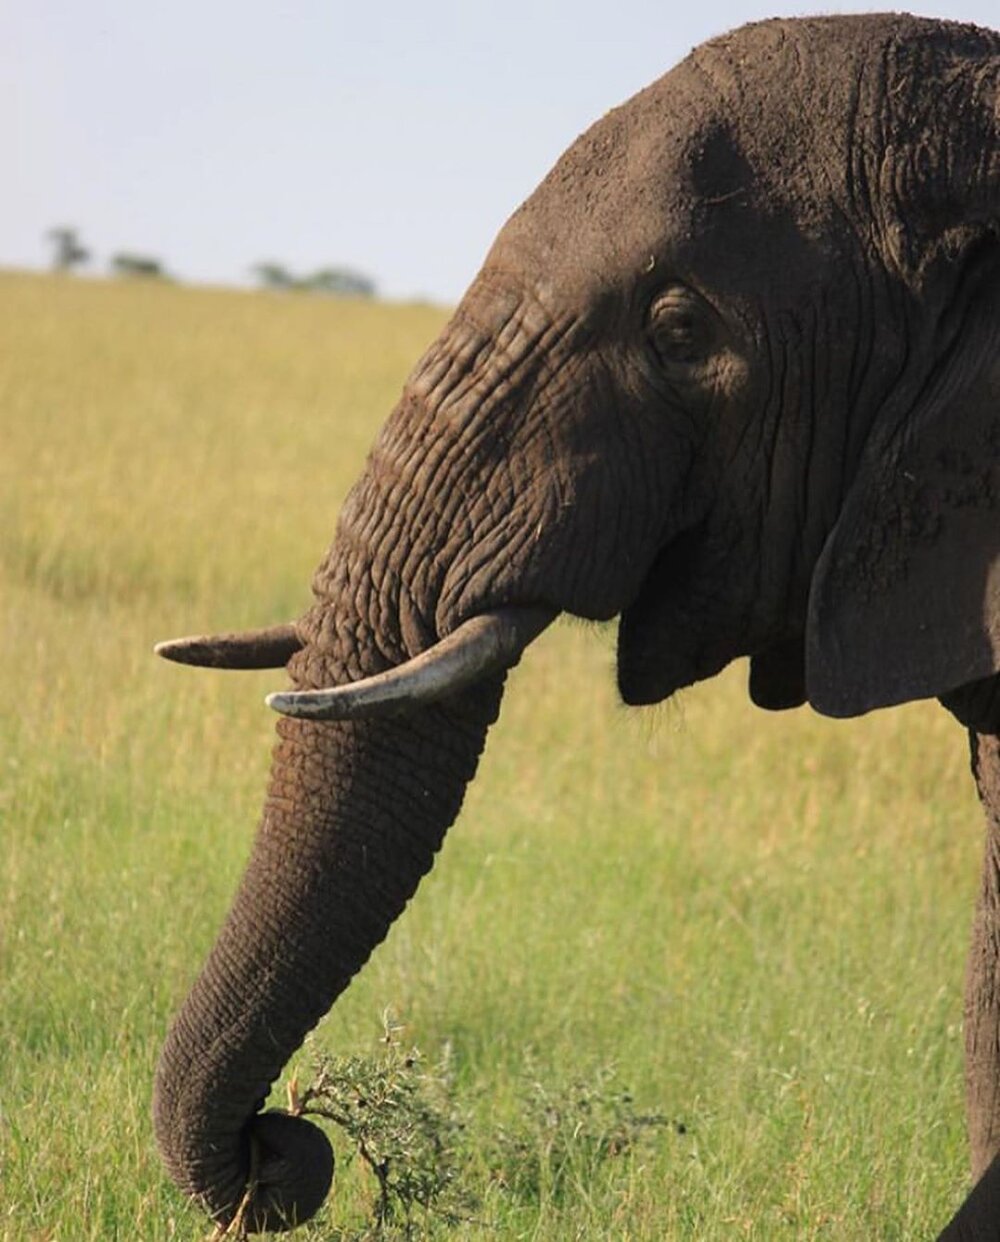 Elephants at the Serengeti. Image: Vroni Bernhart.